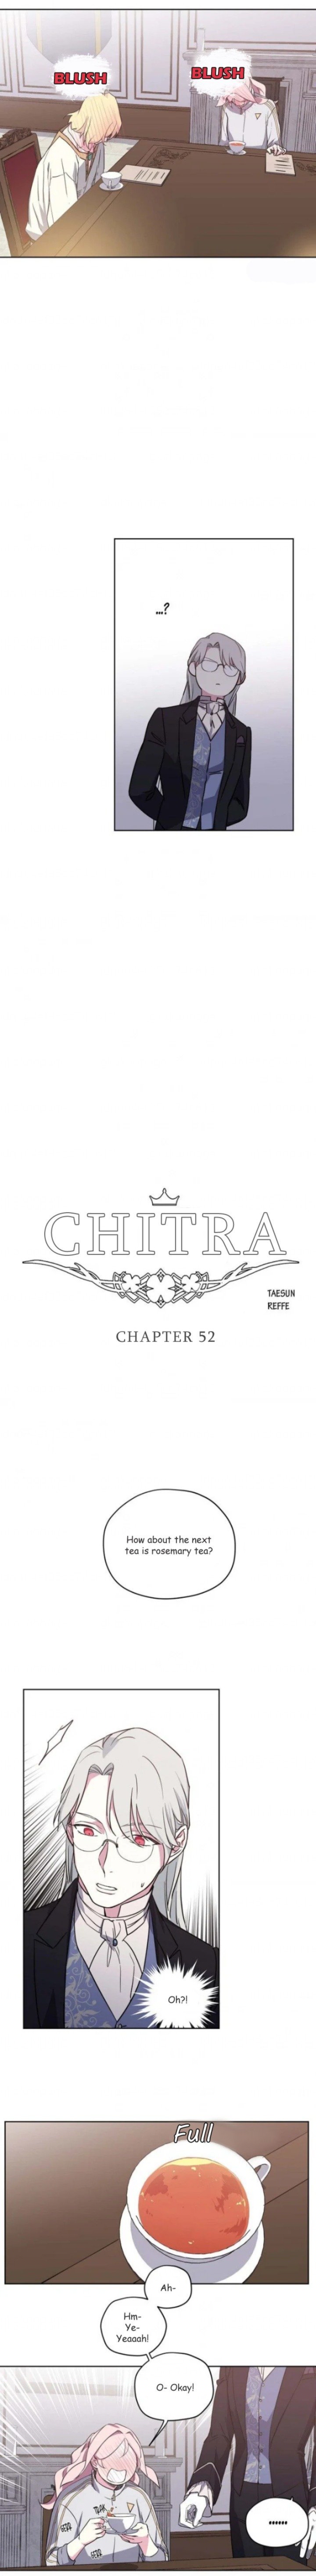 Chitra 52 2